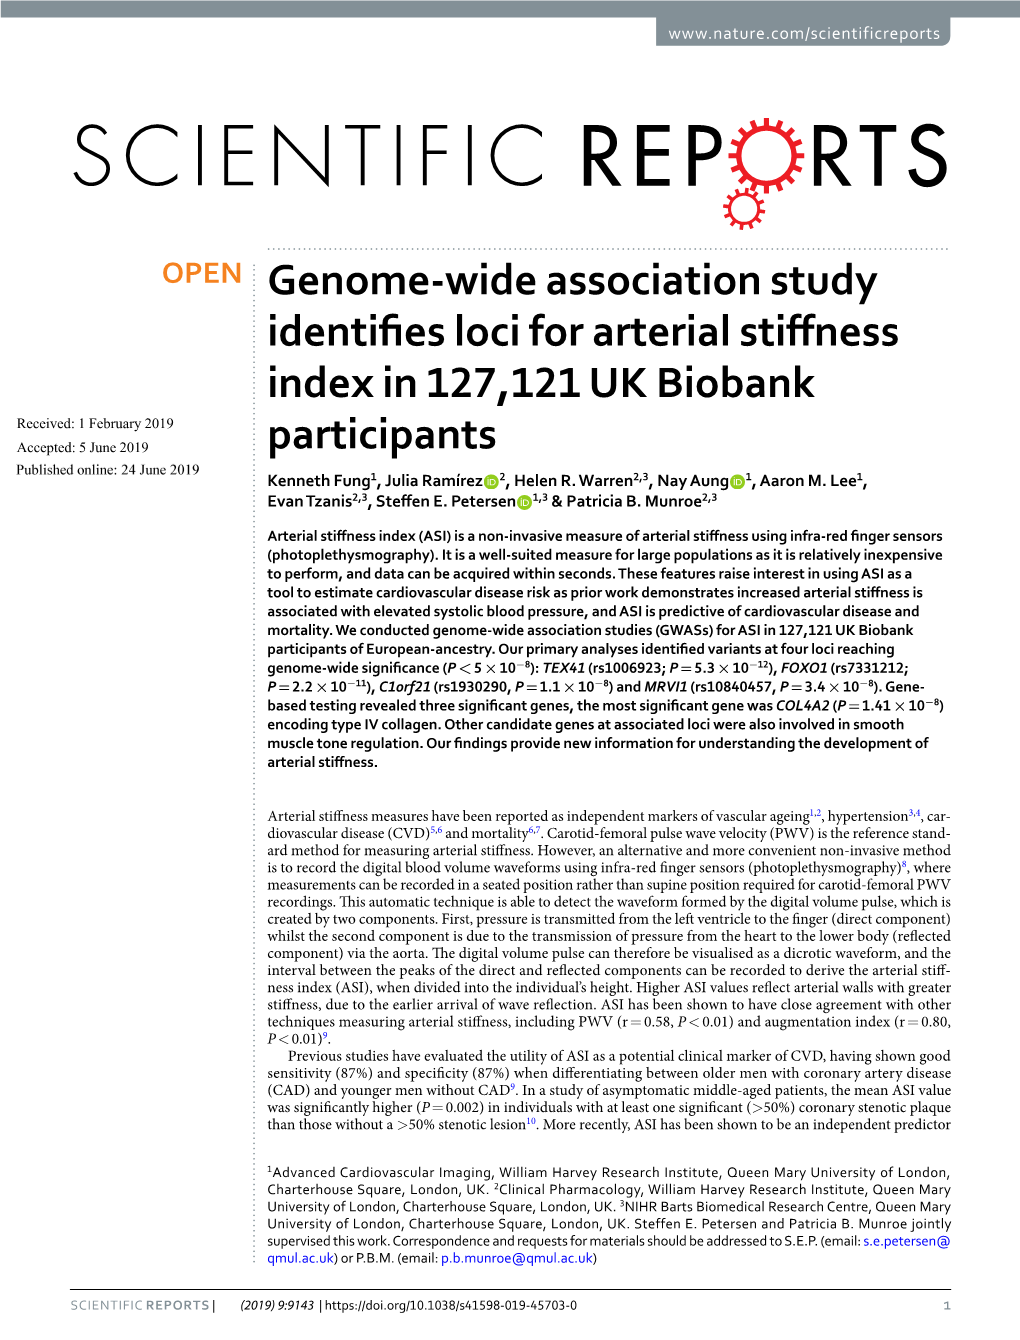 Genome-Wide Association Study Identifies Loci for Arterial Stiffness